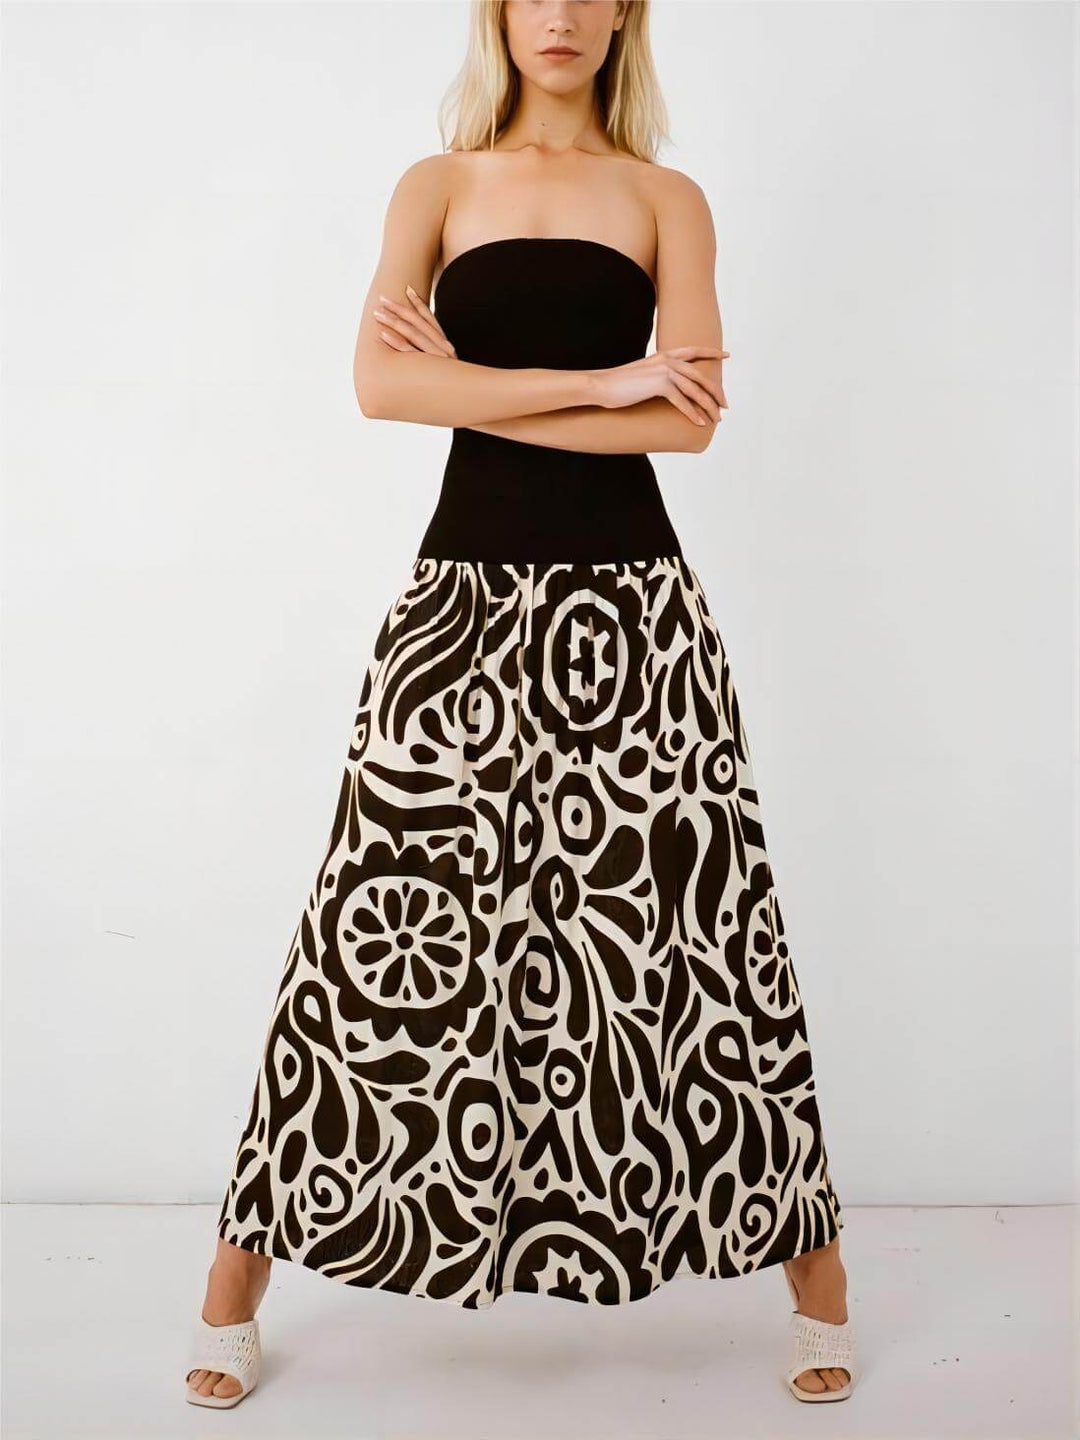 Fashionable Strapless Floral Print Maxi Dress